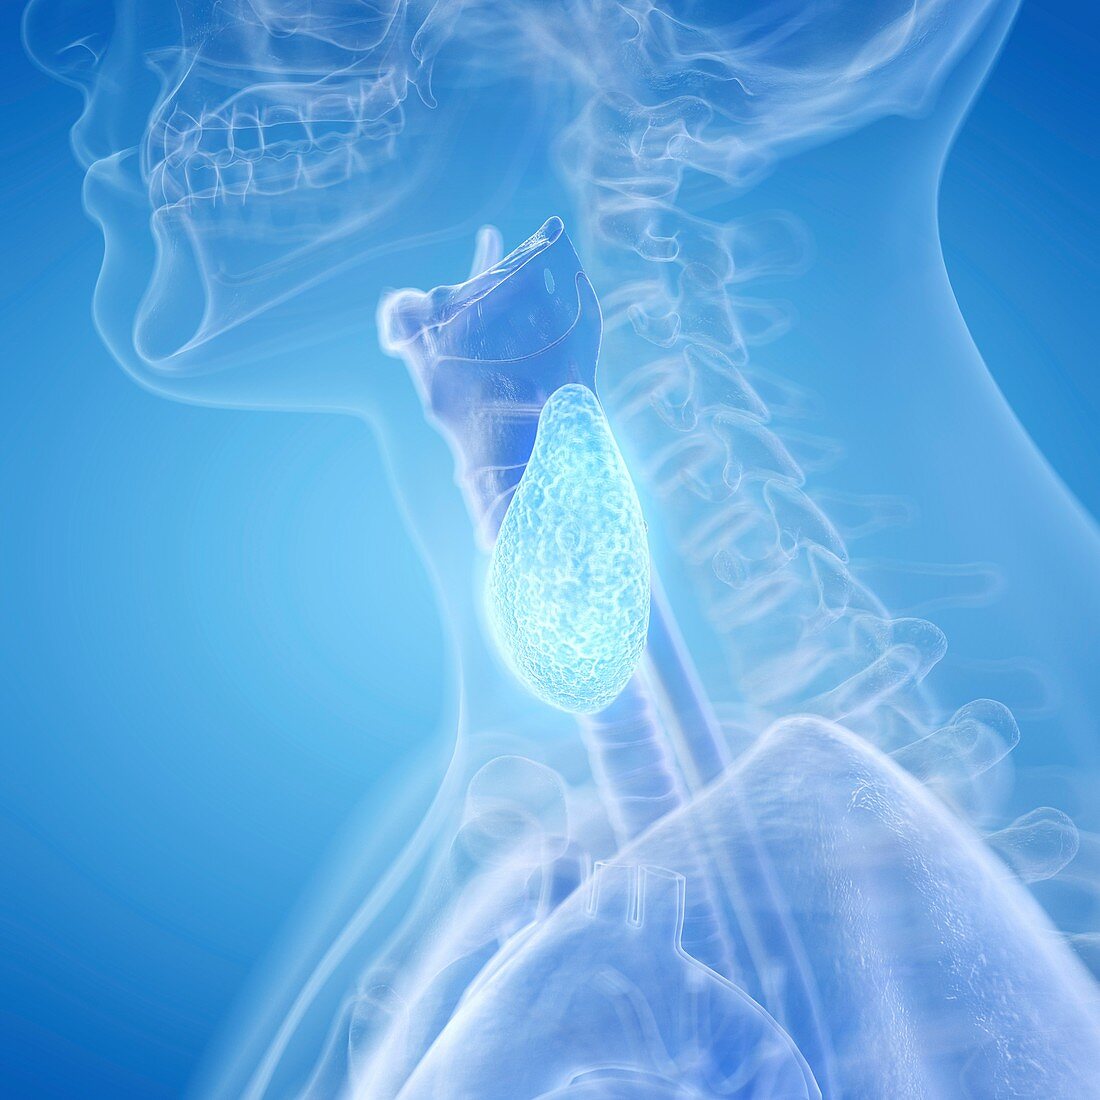 Illustration of the thyroid gland